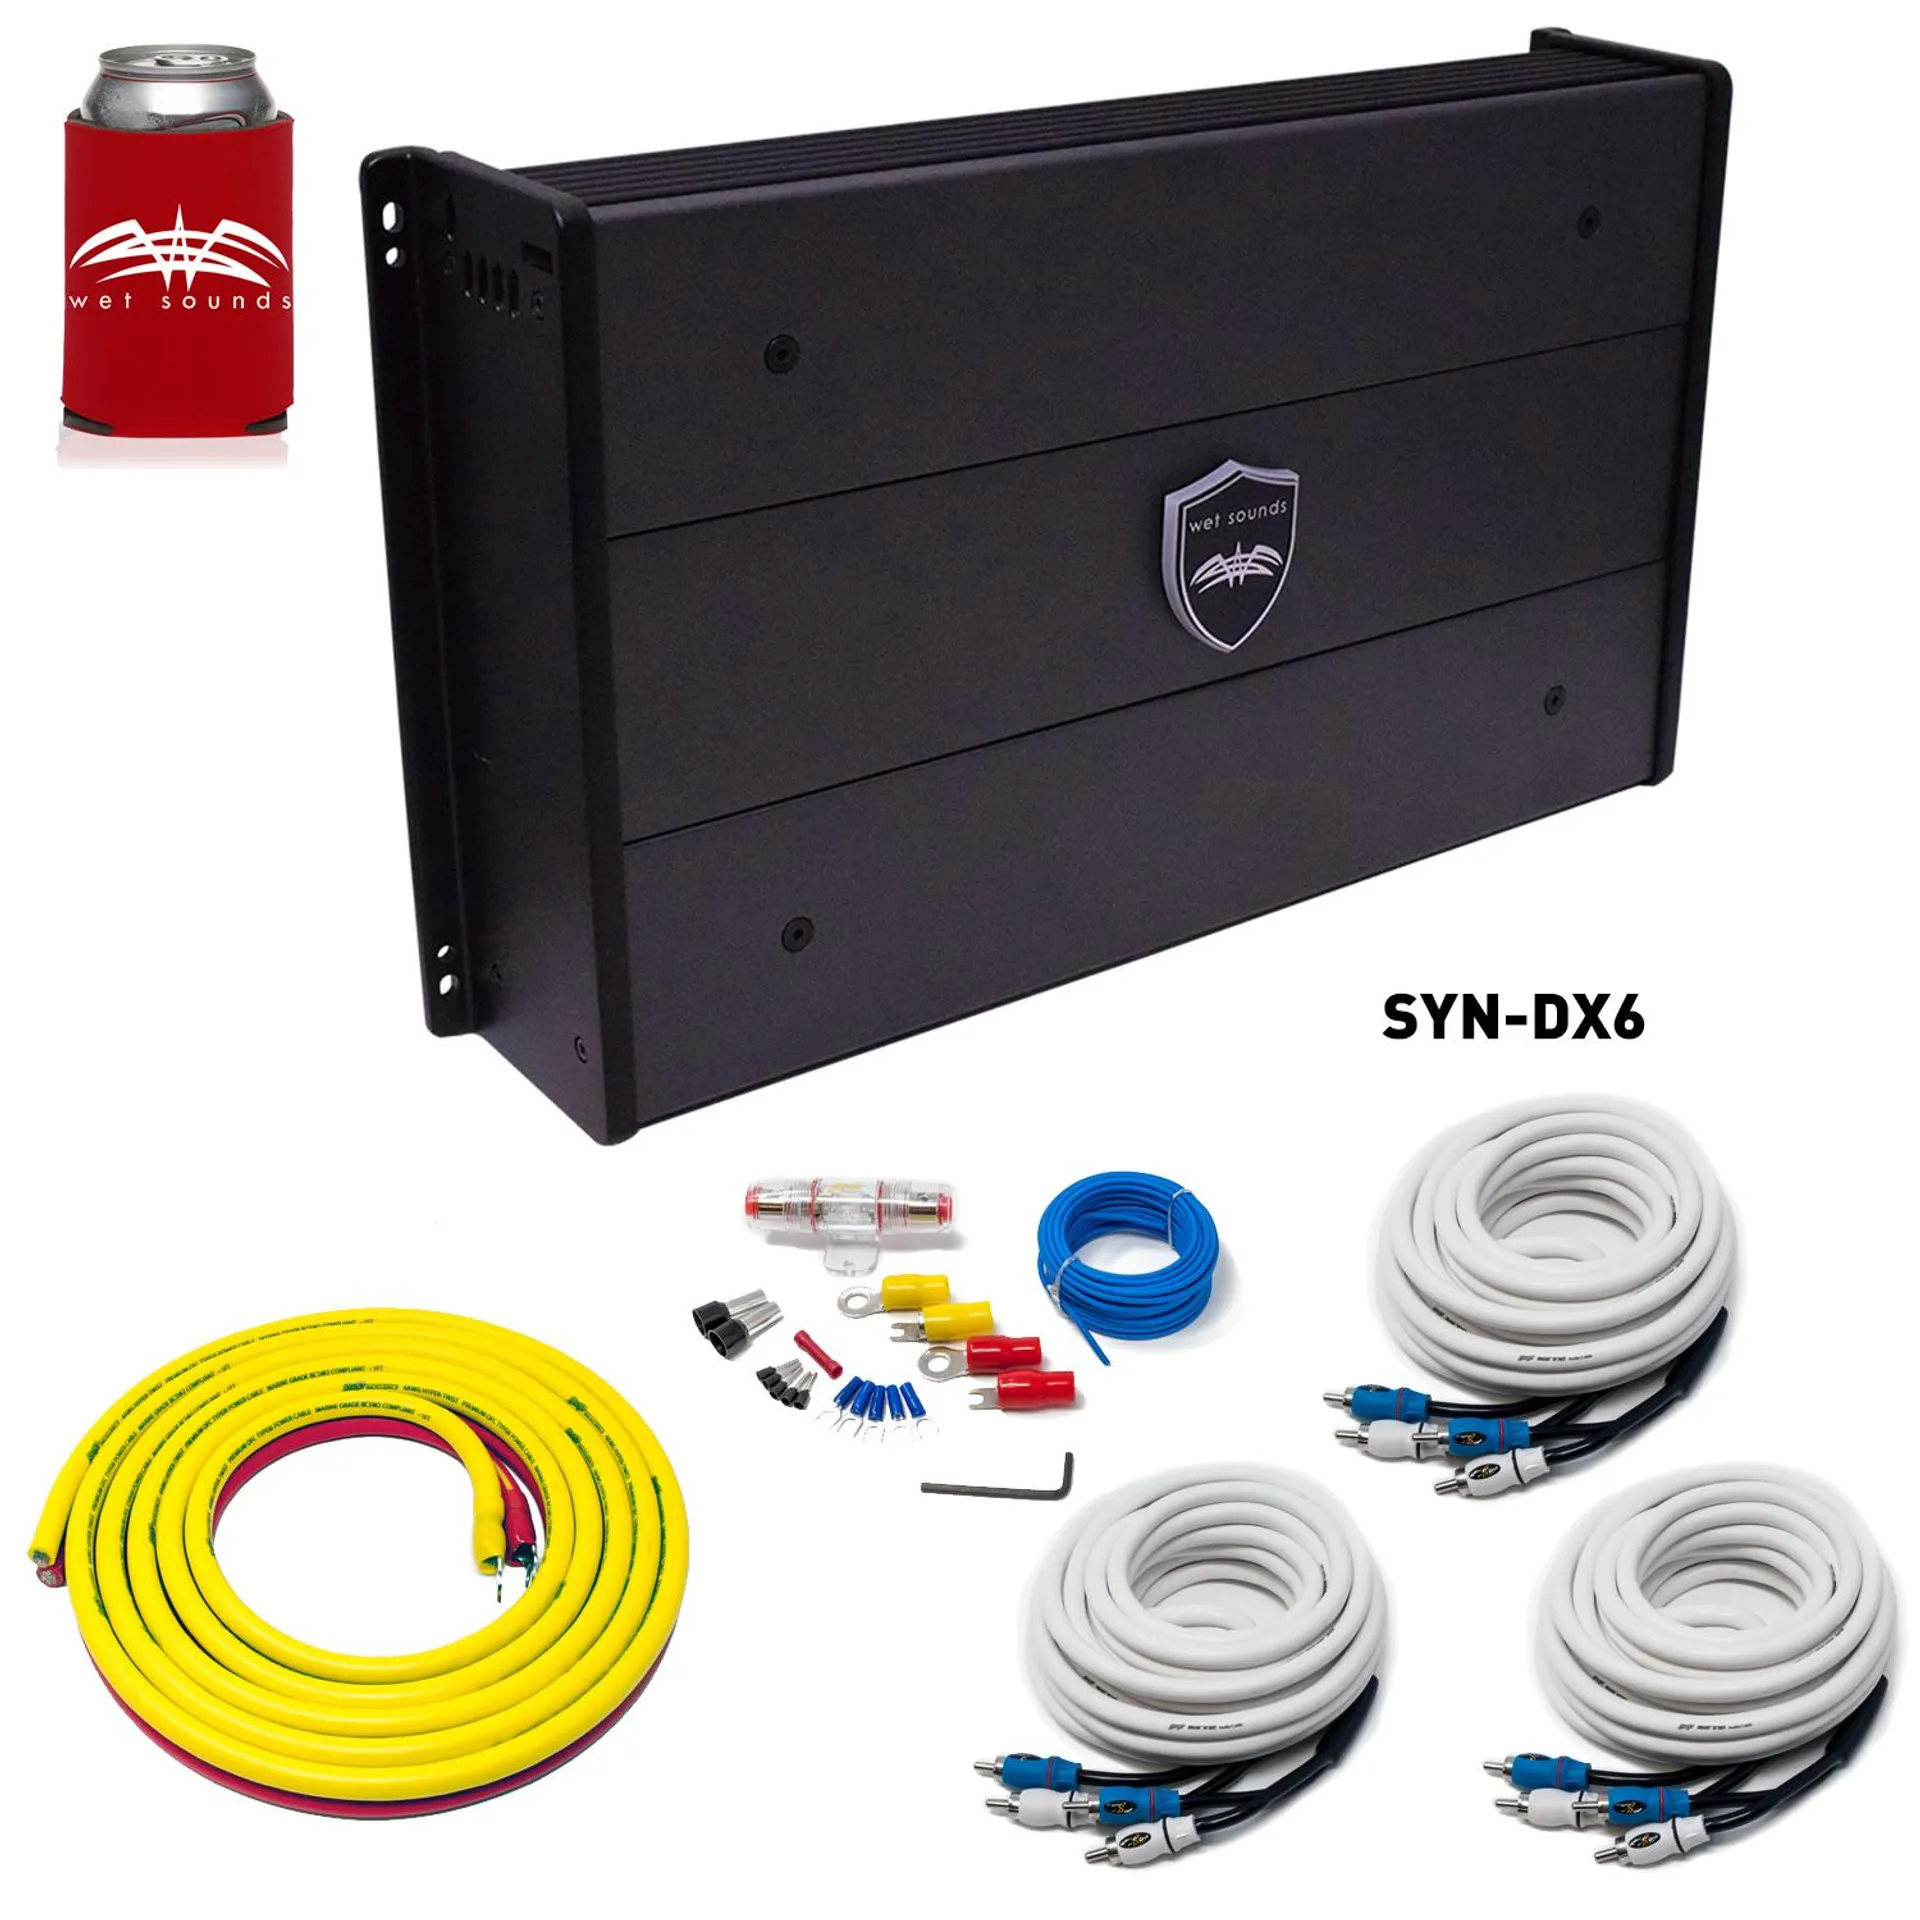 Wet Sounds SYN-DX 6 Full Range 6 Channel Amplifier & Stinger 3-Meter 4-Gauge Amplifier Wiring Kit w/ RCAs